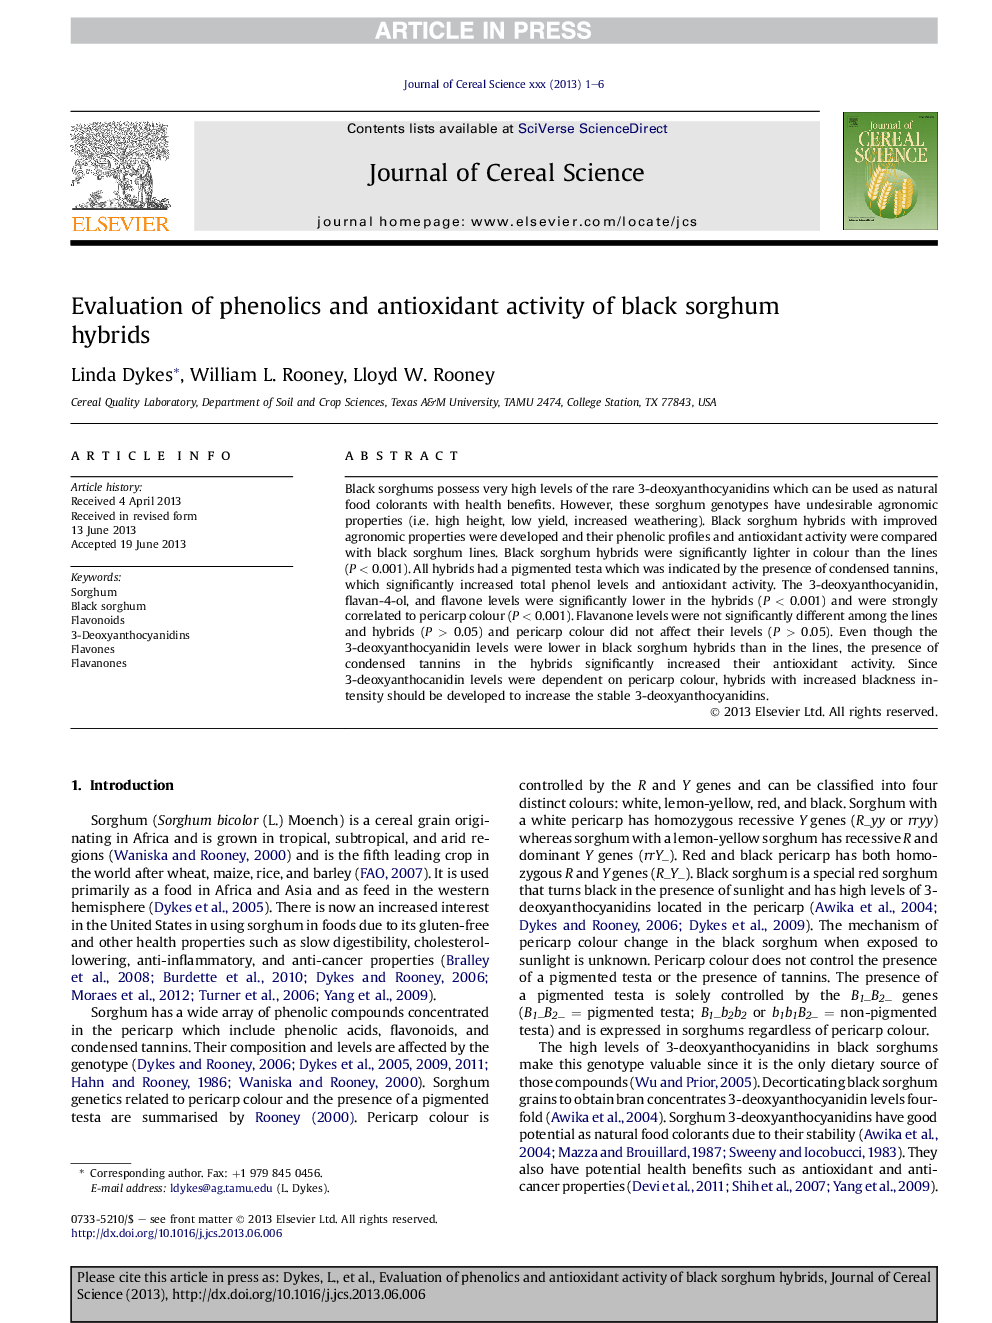 Evaluation of phenolics and antioxidant activity of black sorghum hybrids